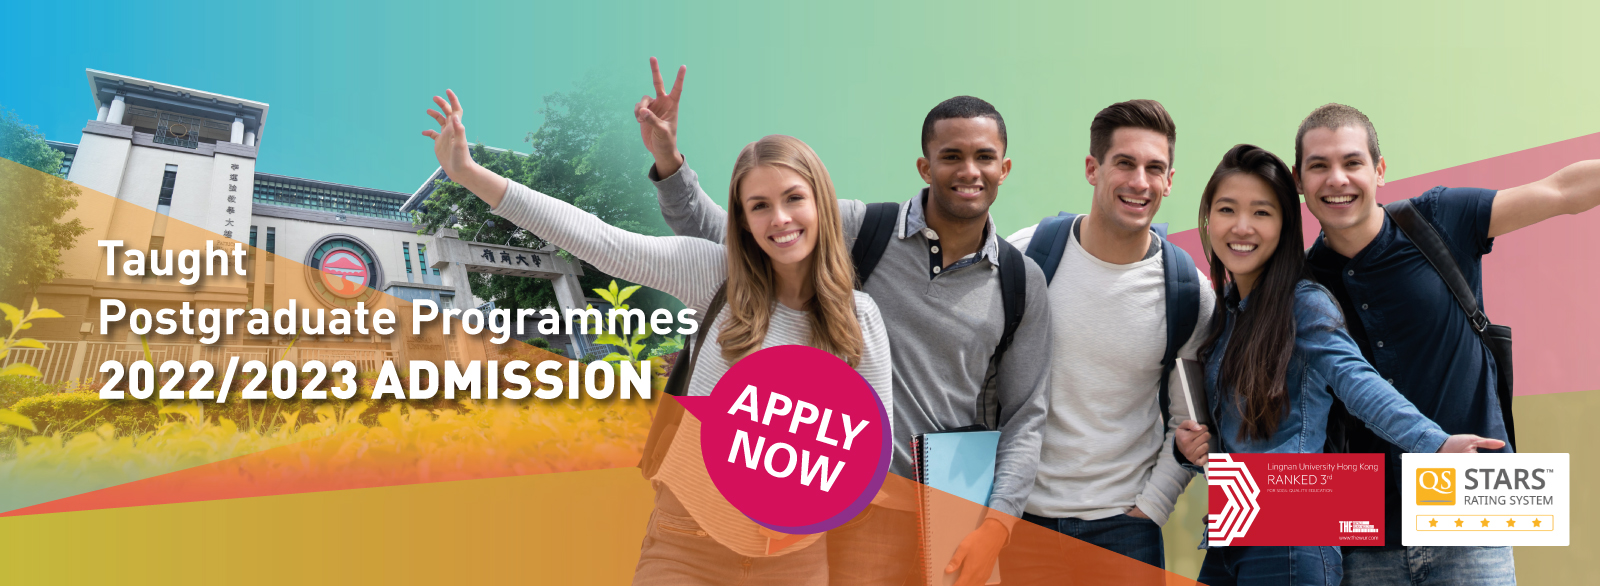 2022-23 Taught Postgraduate Programmes Admission 